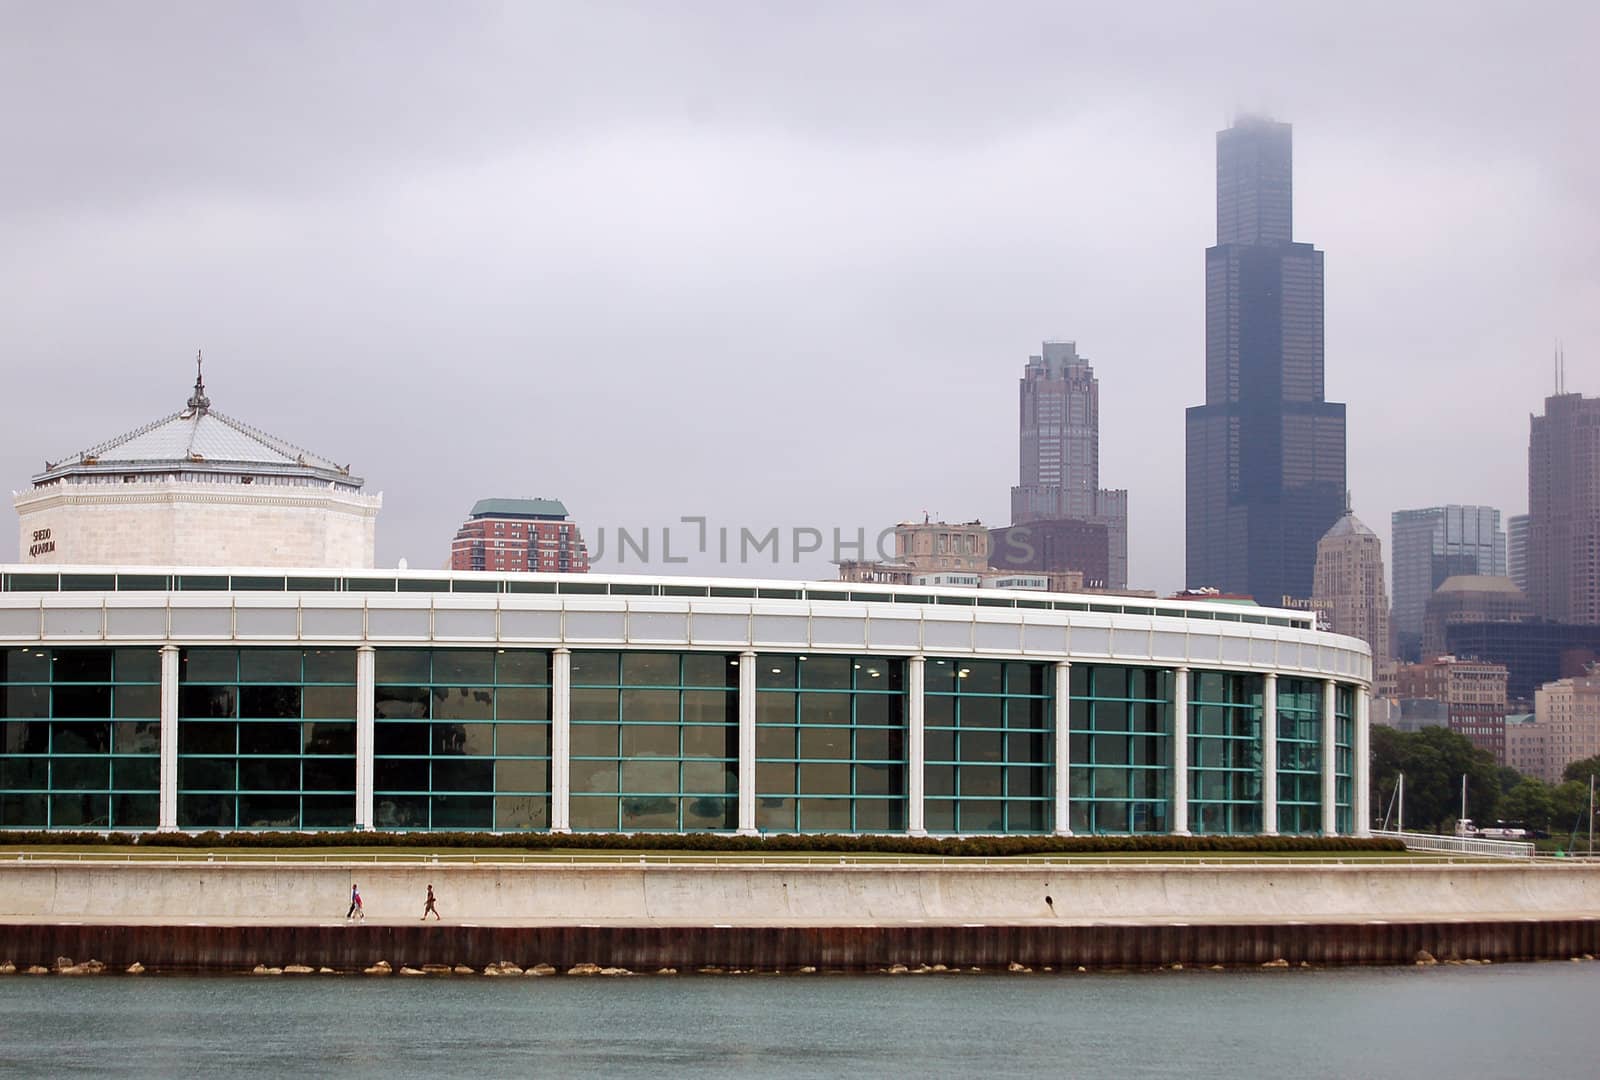 The Chicago Aquarium by nialat